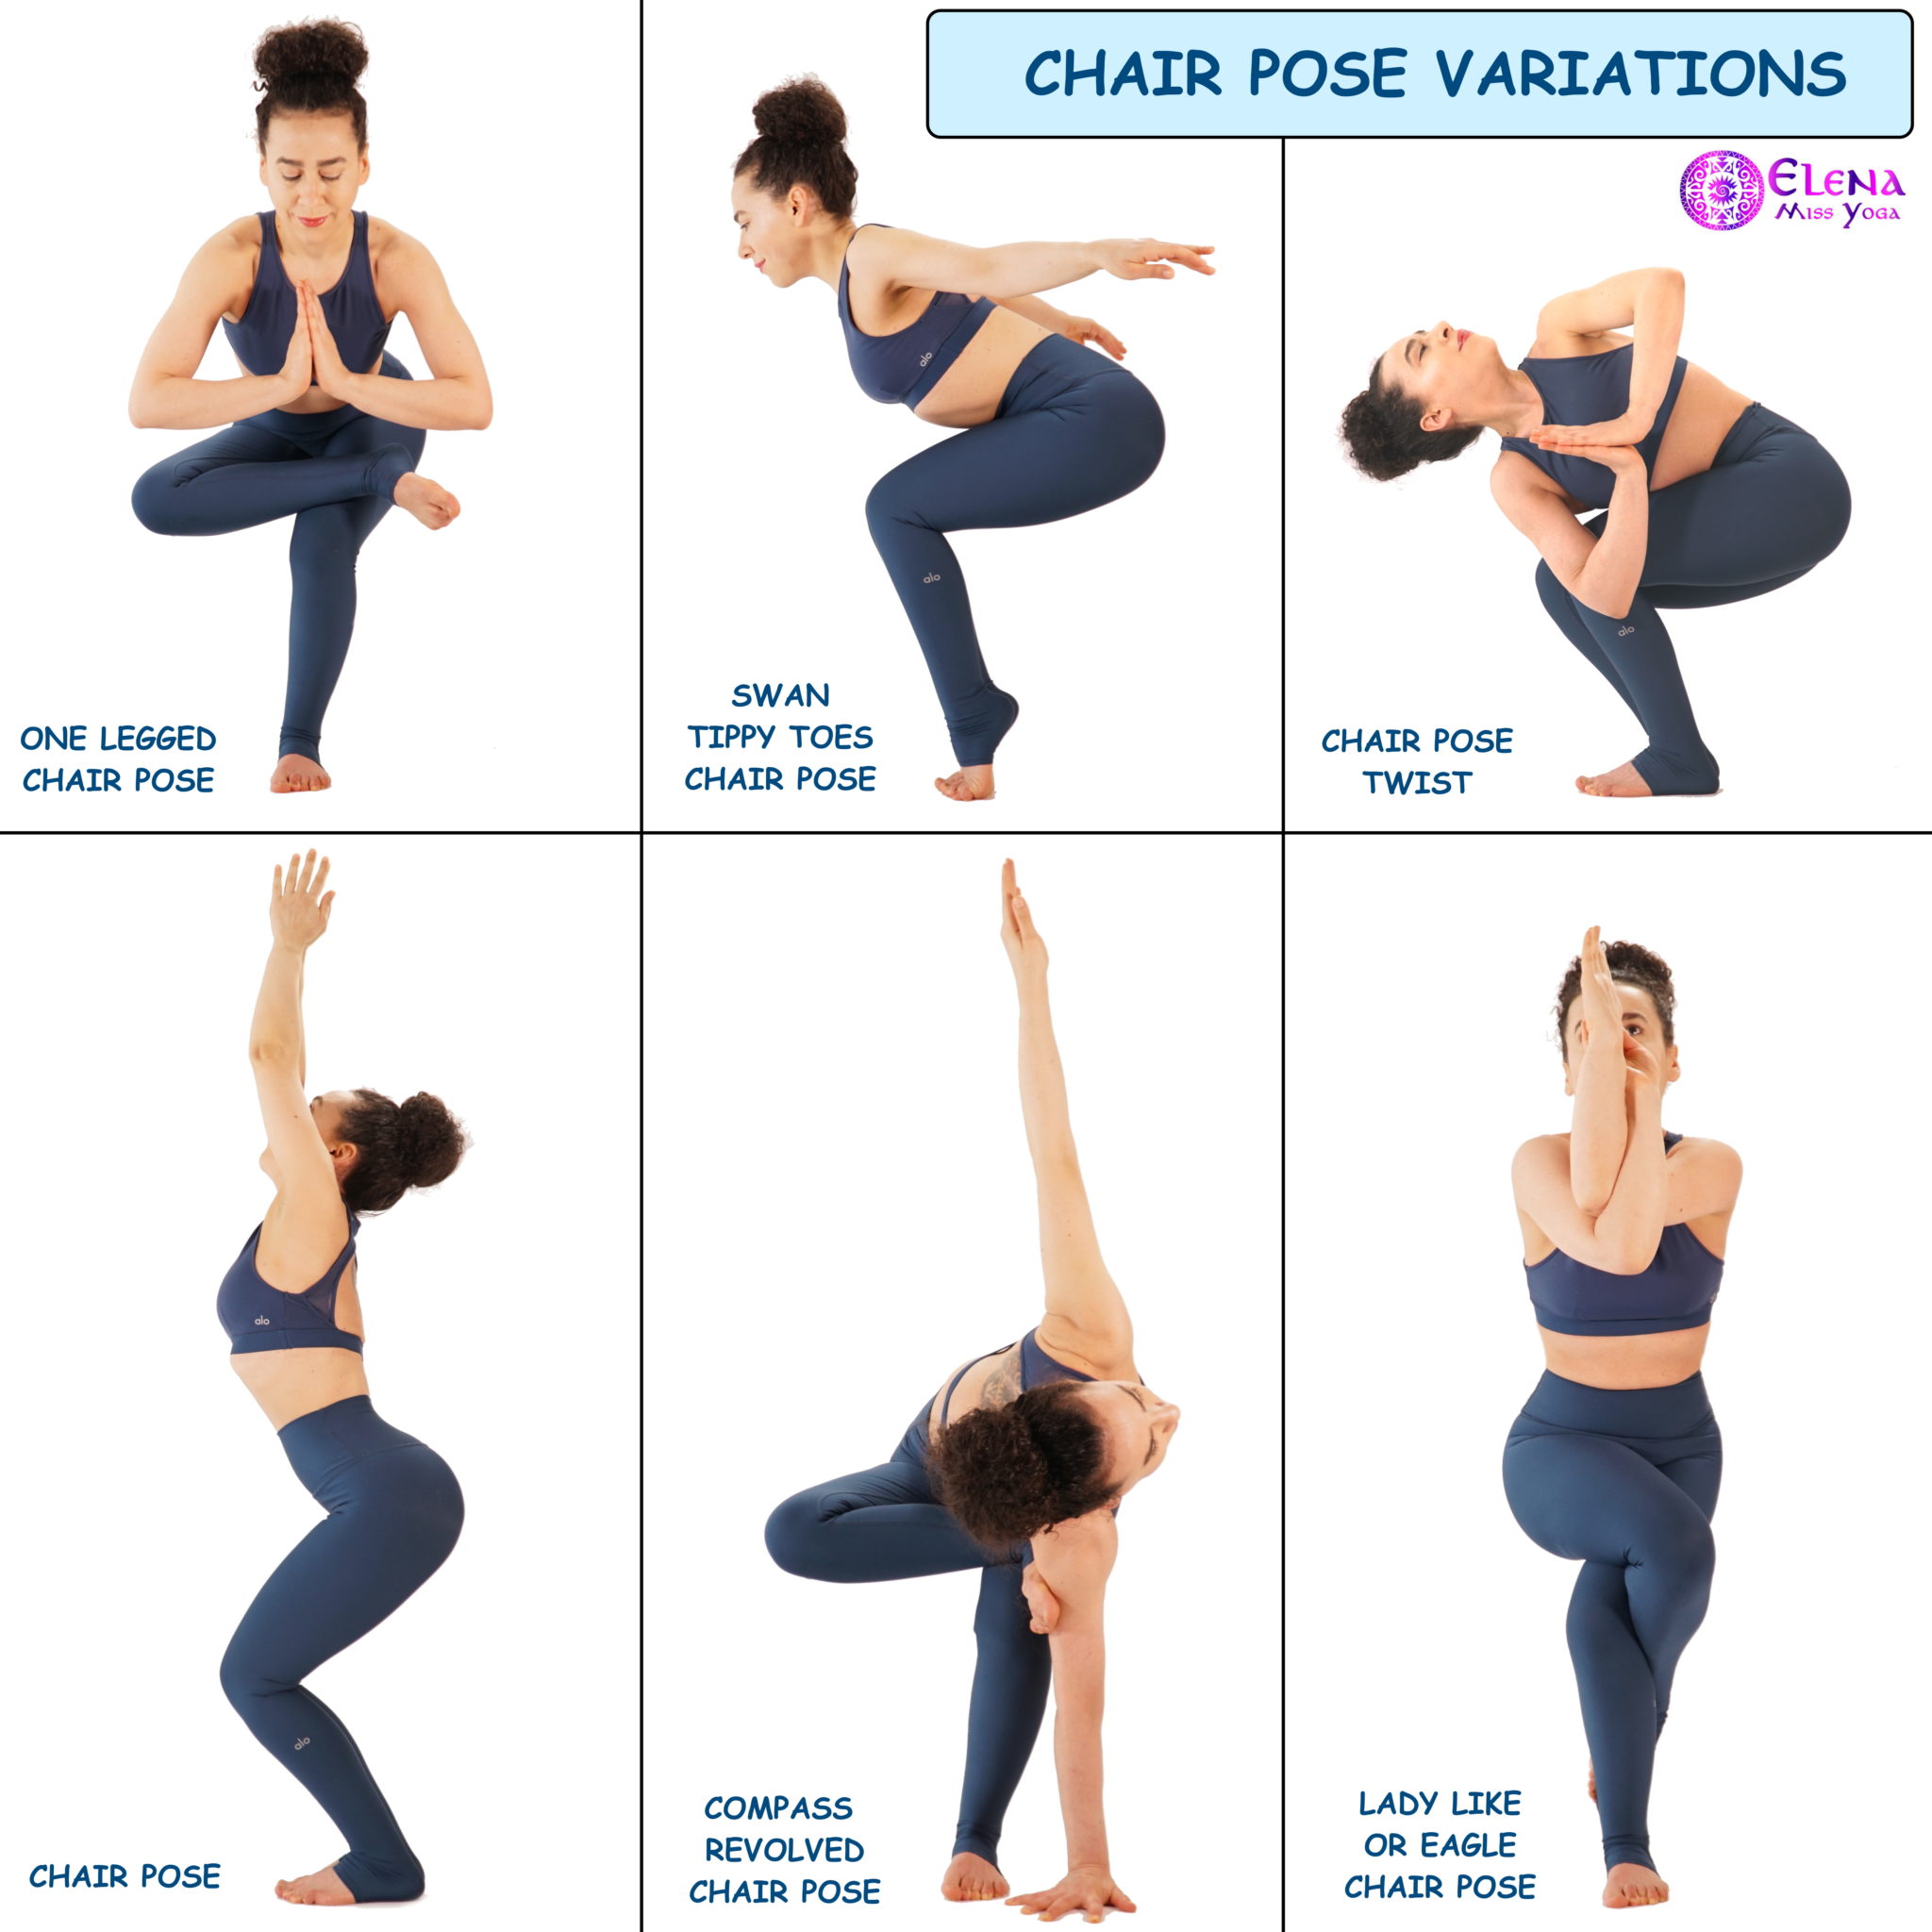 CHAIR POSE VARIATIONS – Elena Miss Yoga